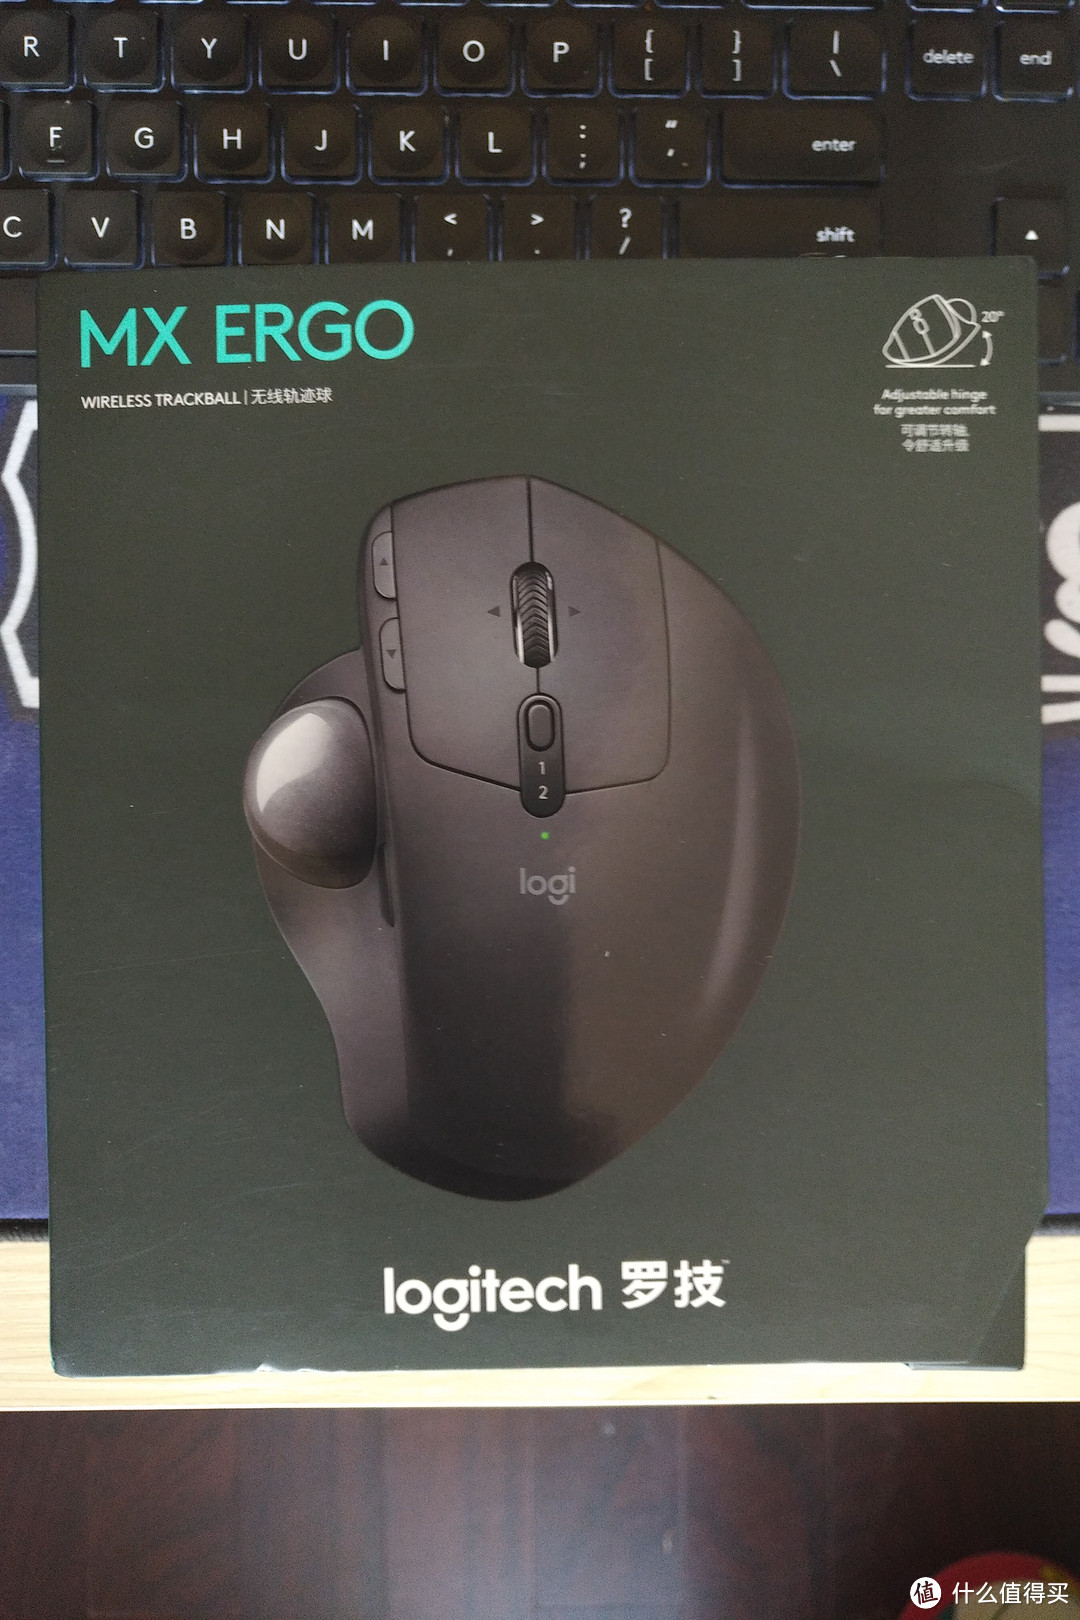 Logitech 罗技 MX Ergo 多设备链接轨迹球鼠标 开箱